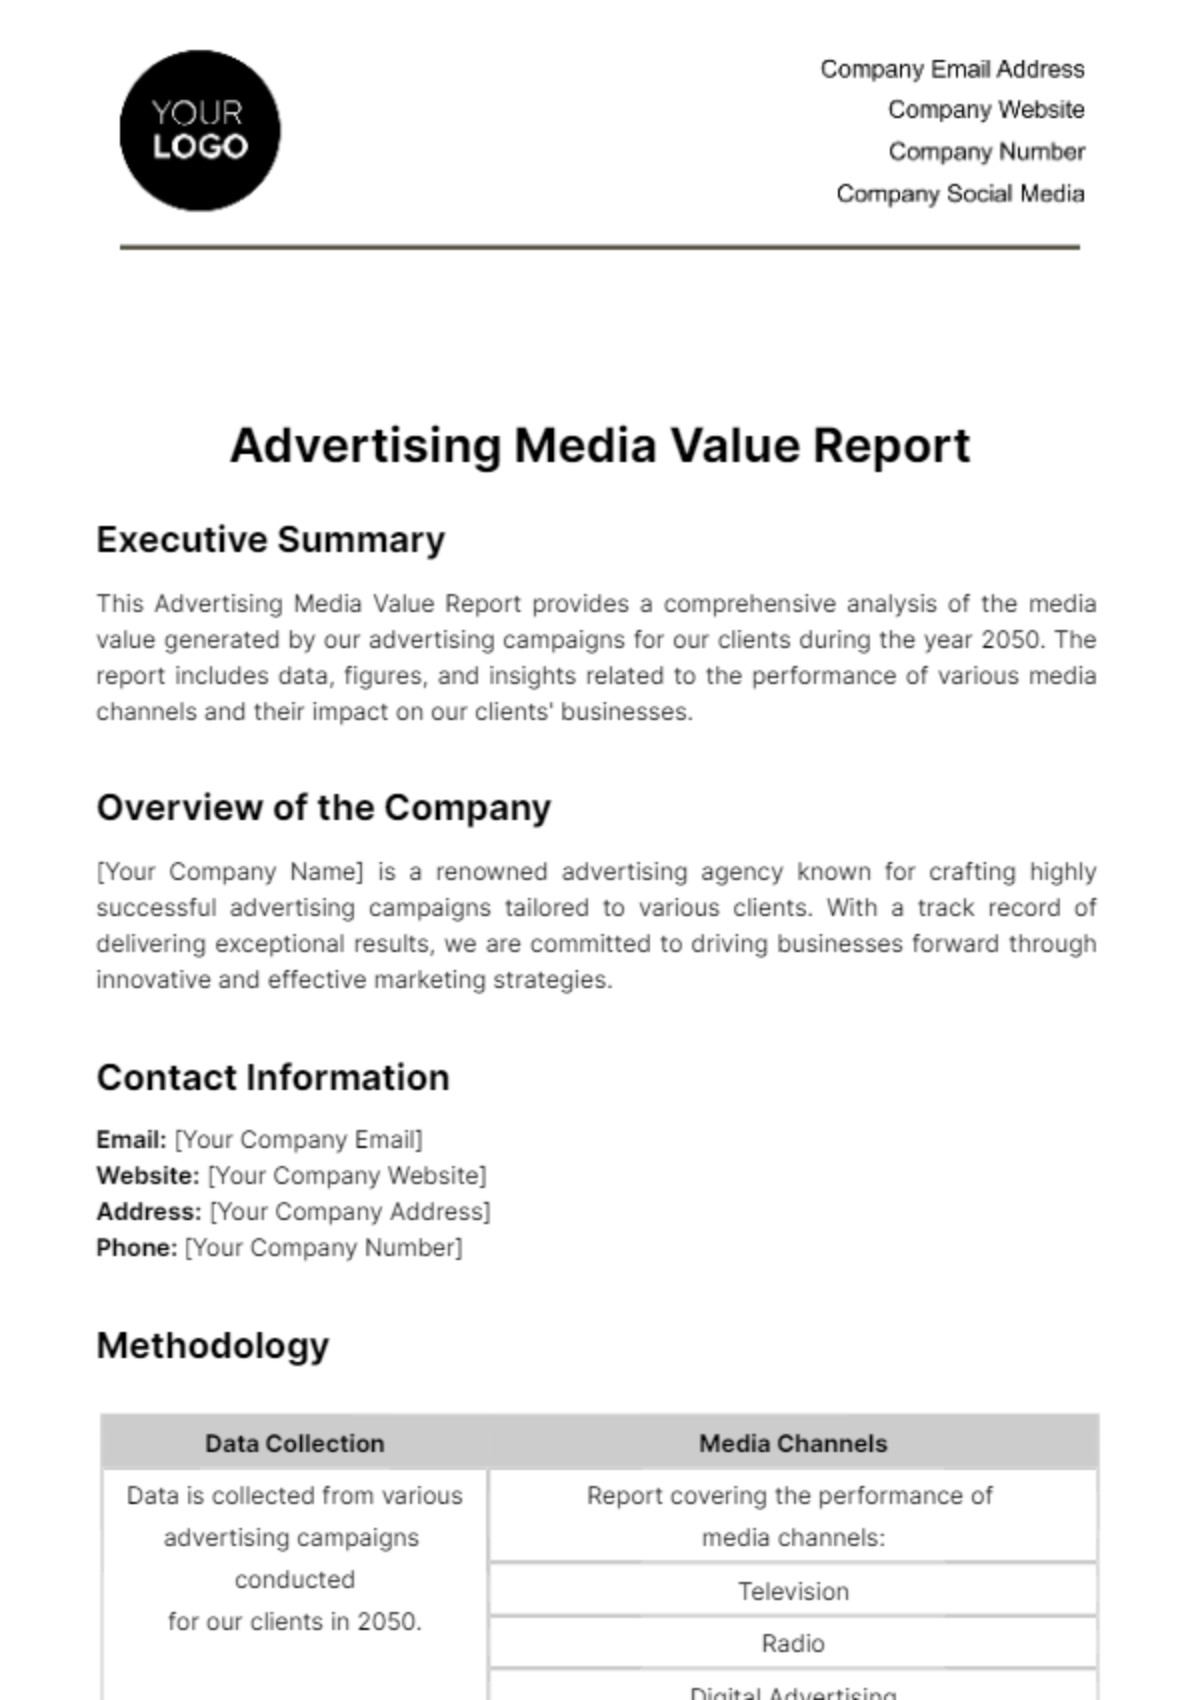 Advertising Media Value Report Template